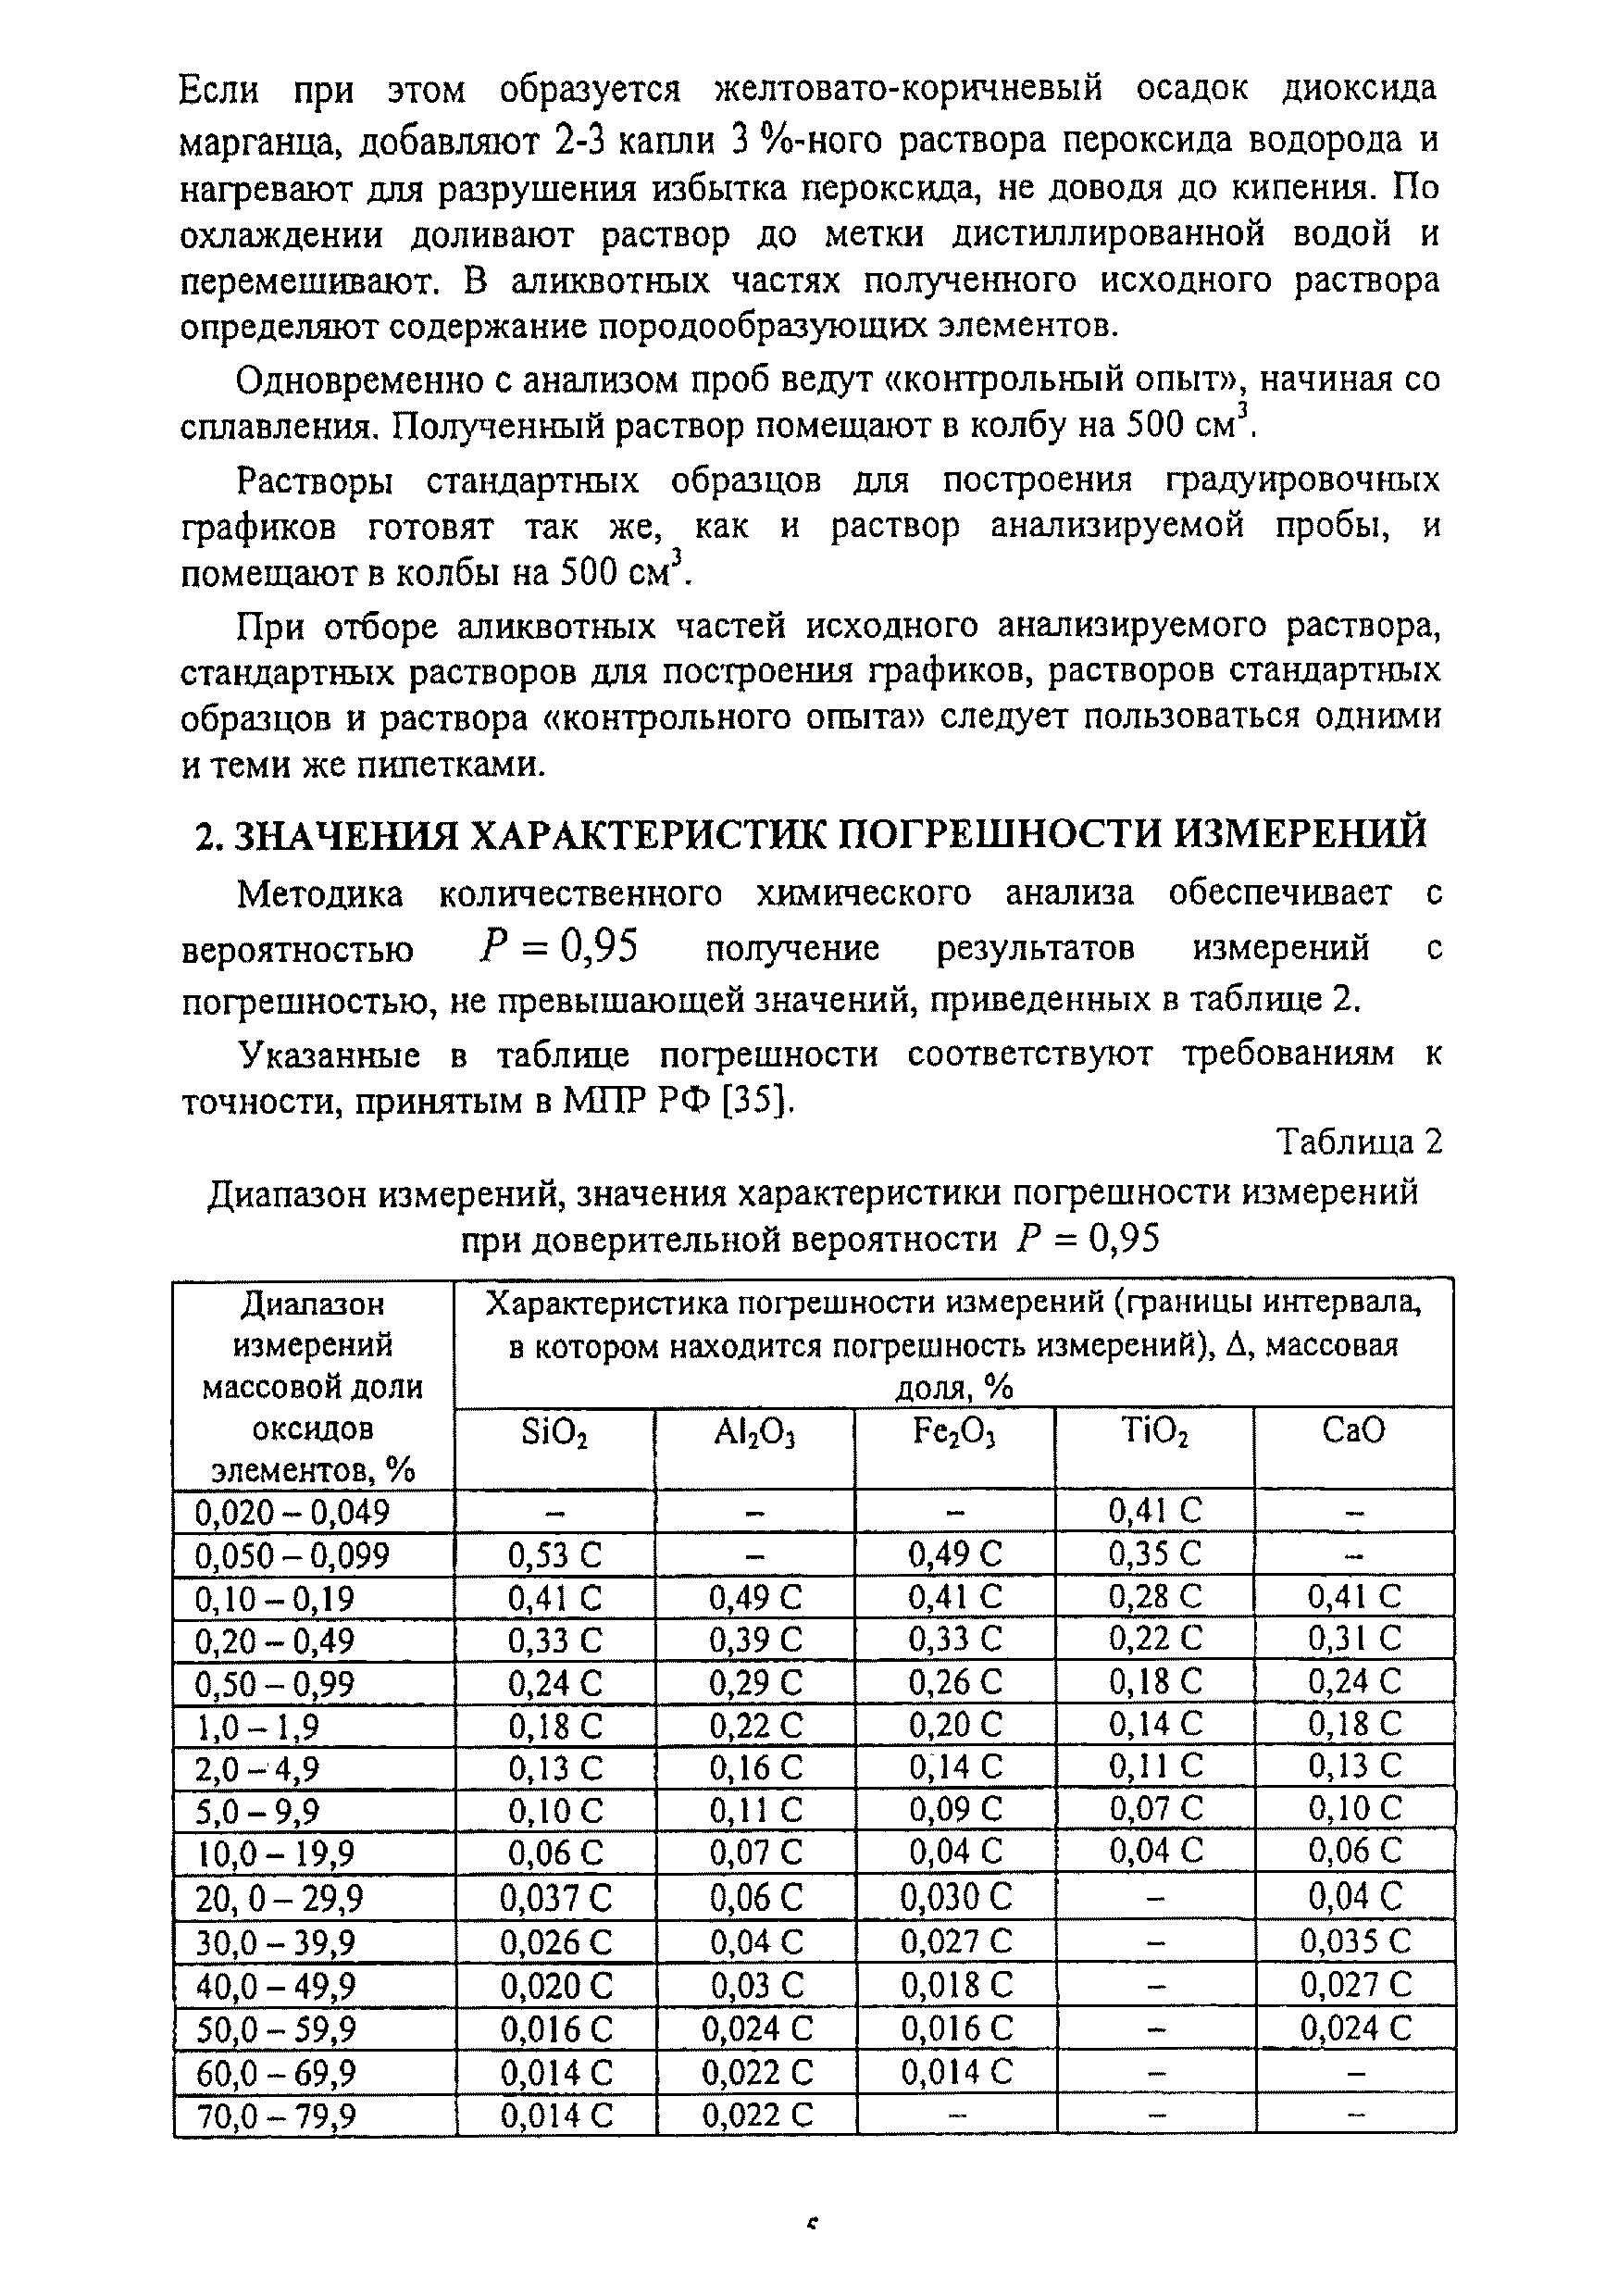 Методика НСАМ 138-Х